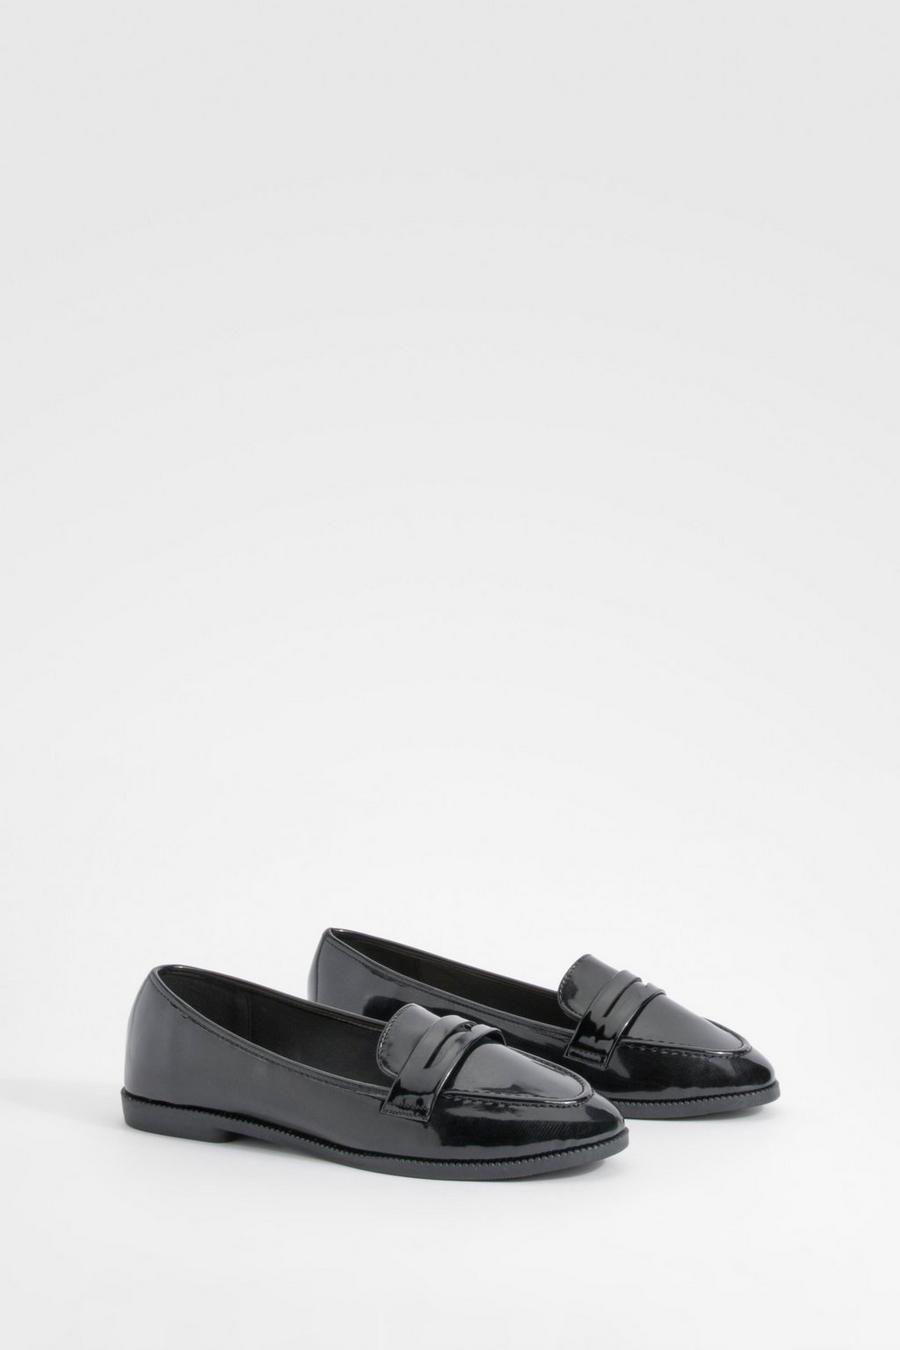 Runde Basic Loafers, Black